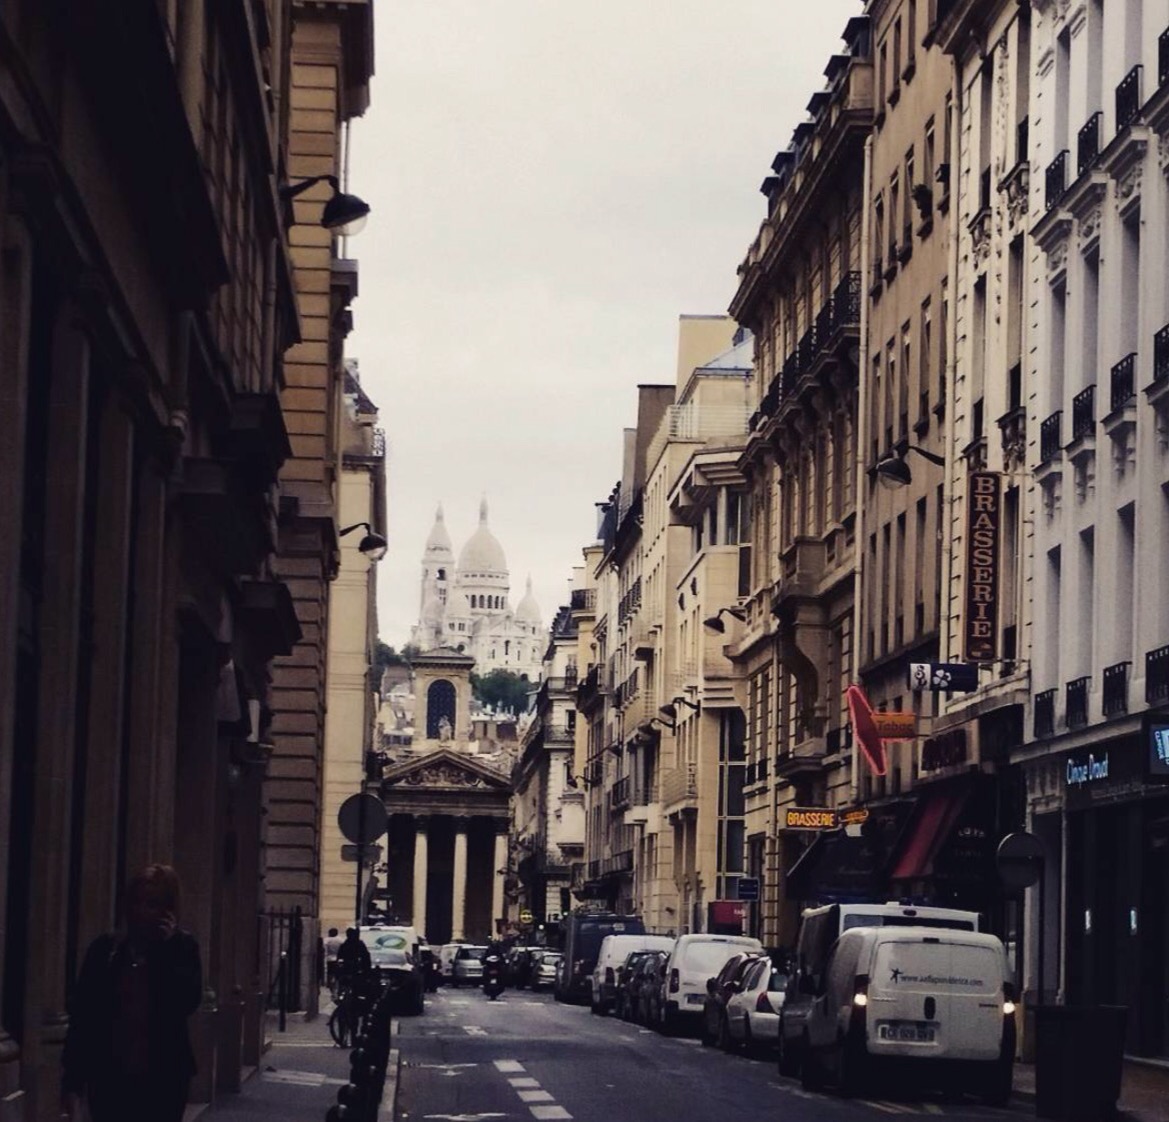 thecardiffcwtch - Paris through Instagram